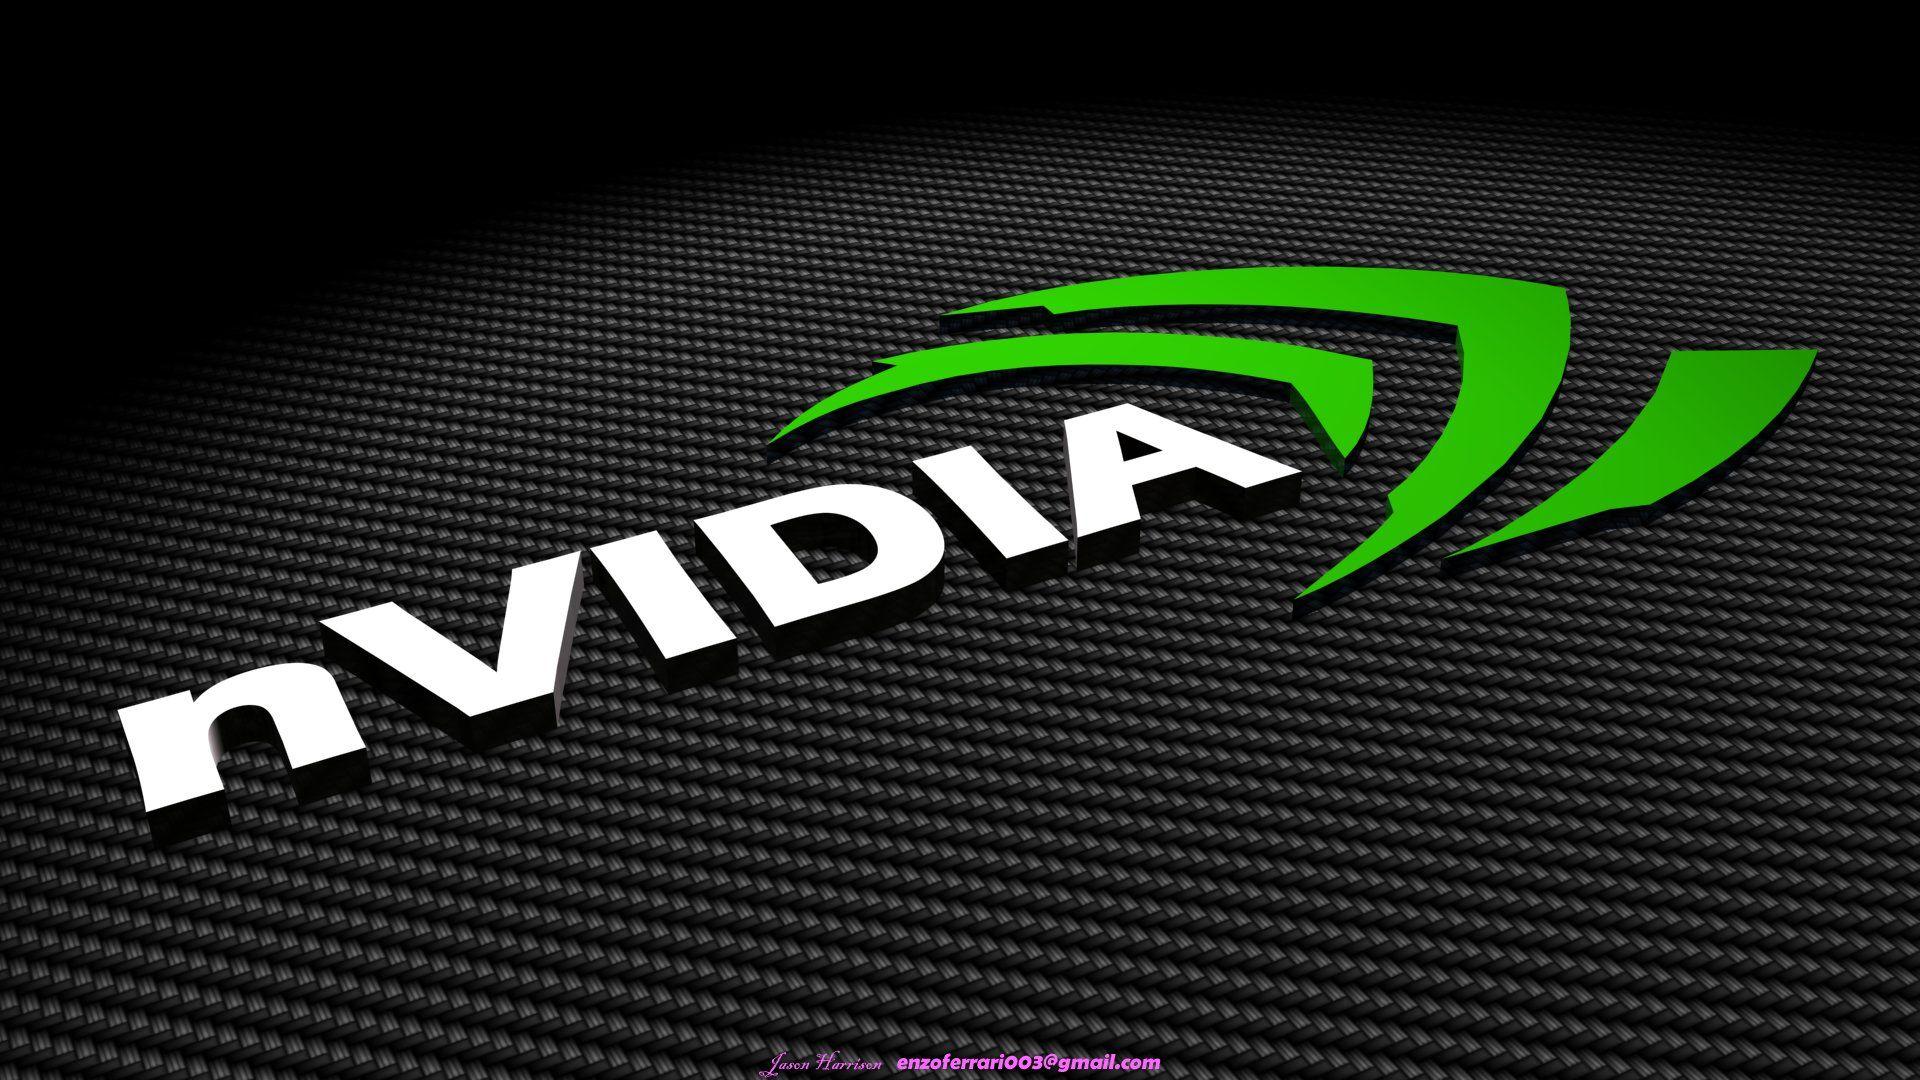 NVIDIA GeForce Wallpaper. Wallpaper For Desktop. HD